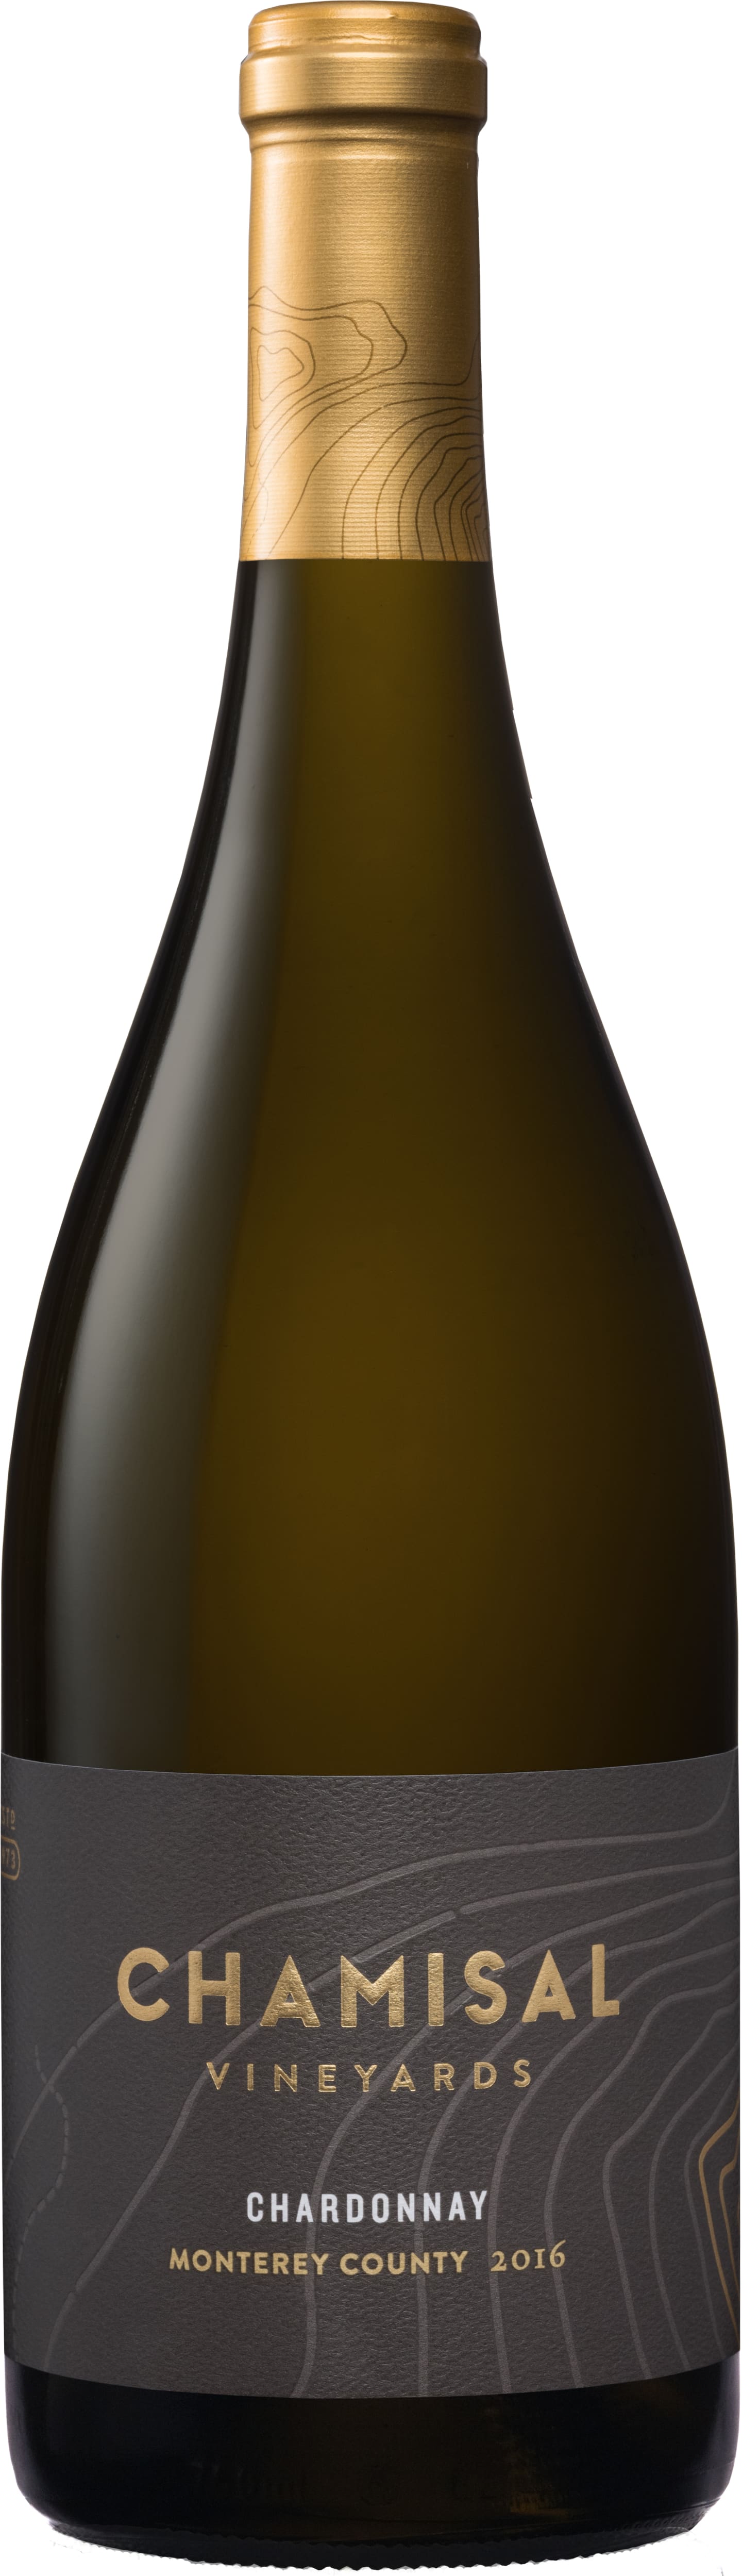 Chamisal Vineyards Chardonnay Monterey County 2016